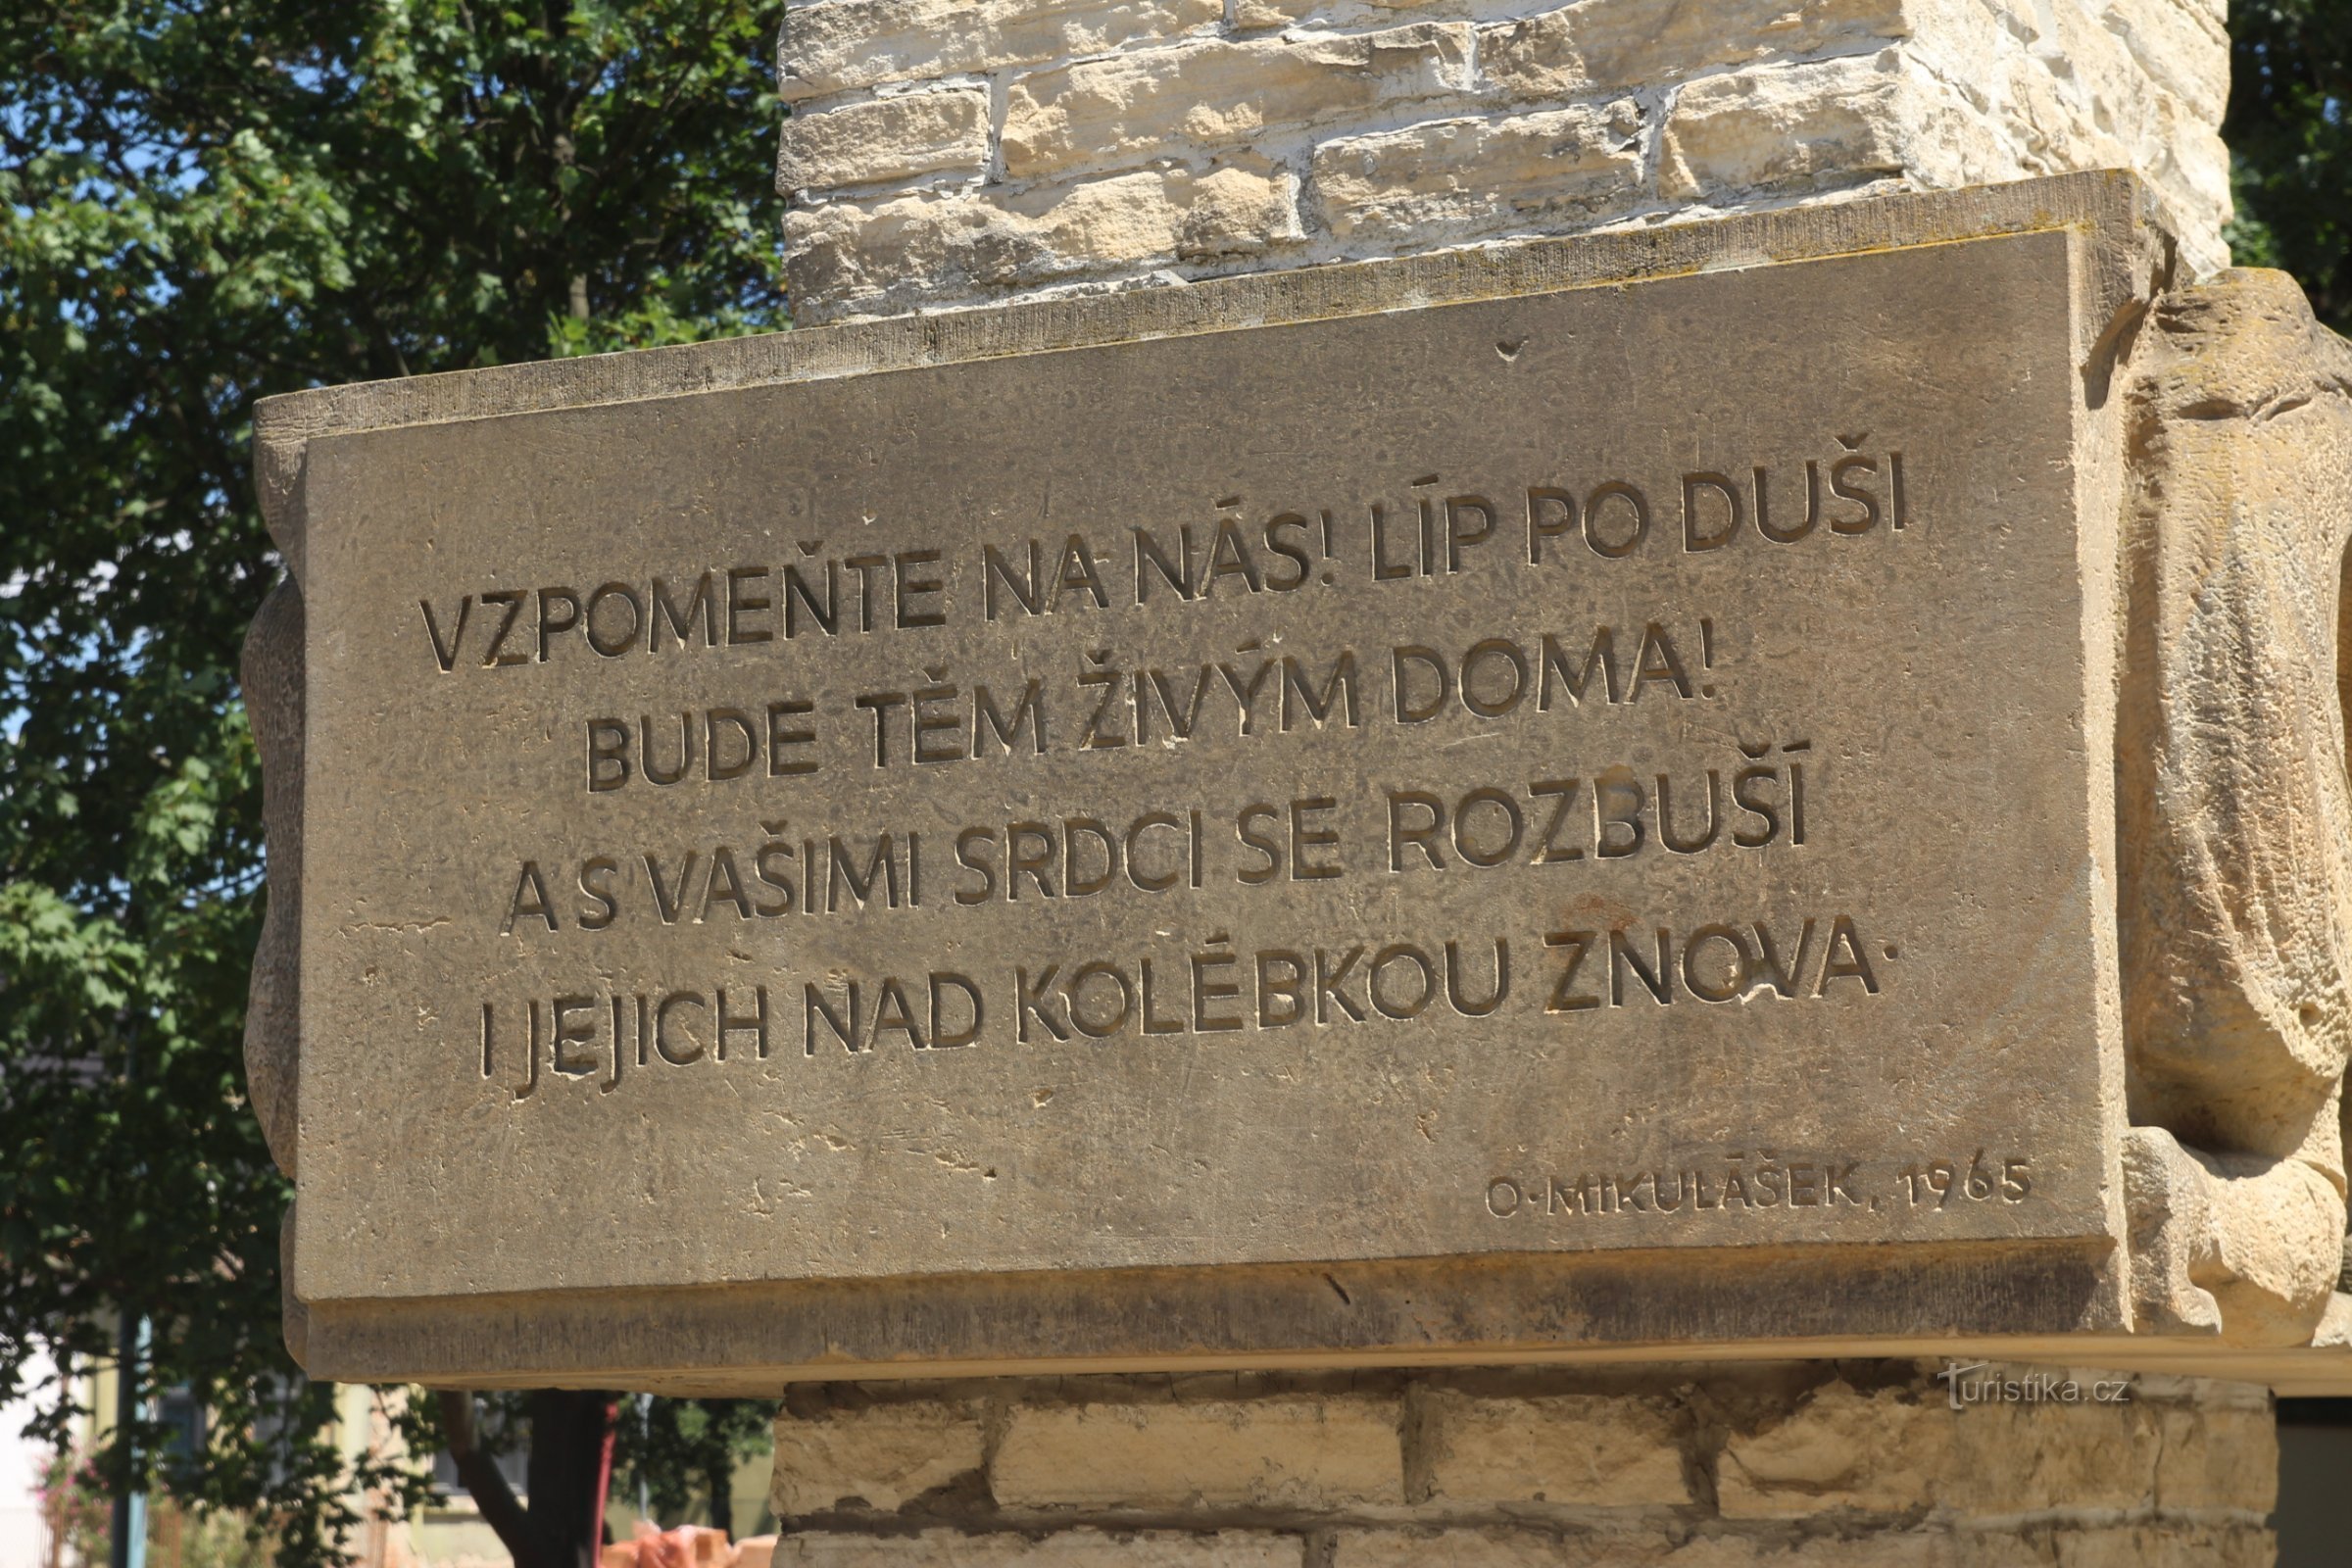 Texto na lateral do monumento